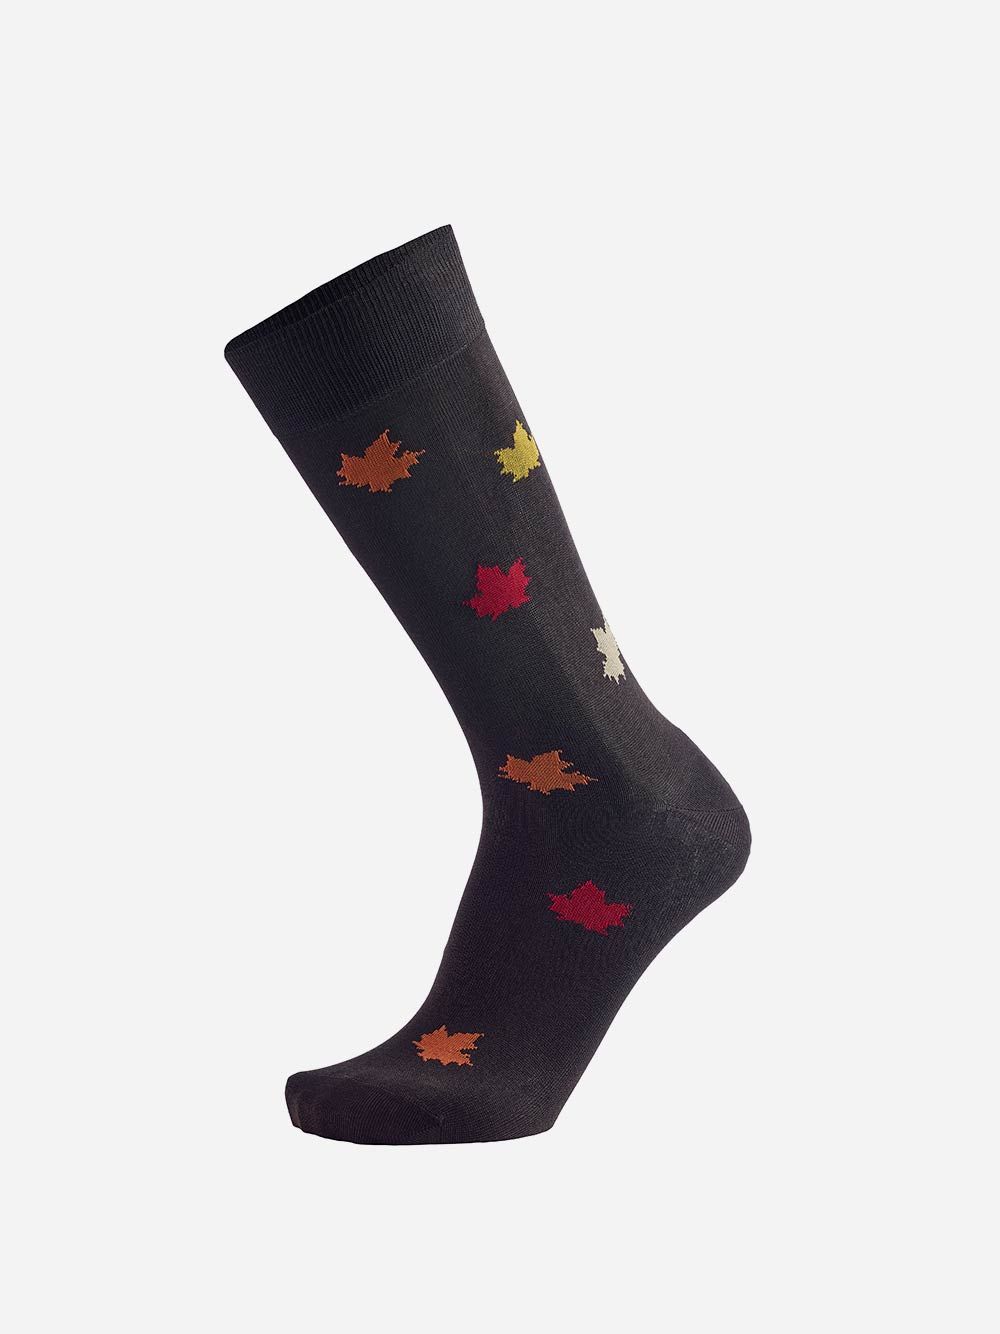 Autumn Socks | Westmister